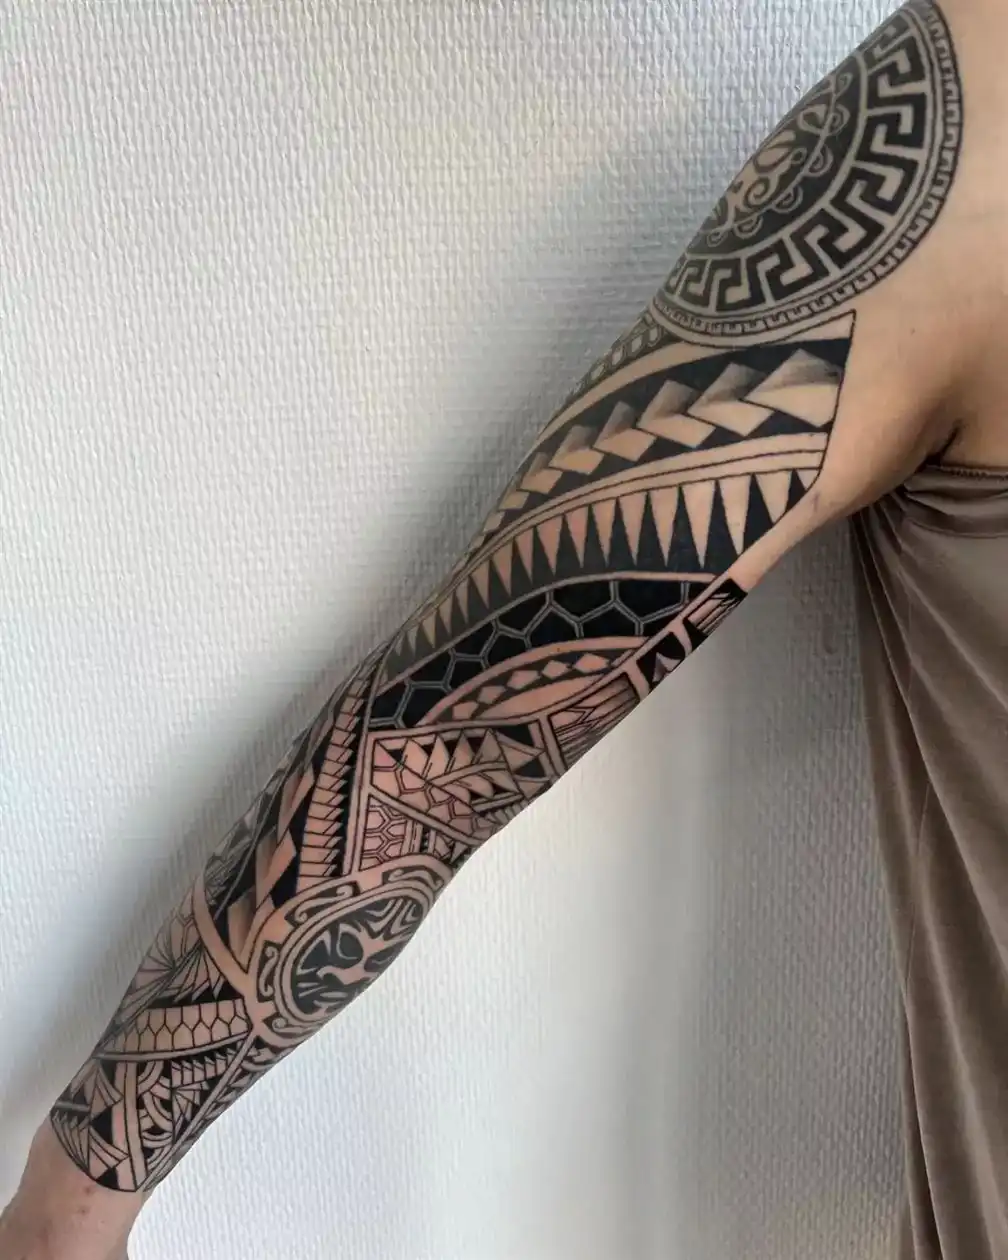 Tattoo uploaded by chang Artist tattoo aonang • Half sleeve tattoo ,Done by  Chang Artist. Thank you🙏 🇭🇰🇭🇰🇭🇰 #artwork #artistic #artists #aonang  #krabi #krabitrip #tattooartist #inked #inks #tattoos #tattooing #tattooed  #tattoo2me #tattooart #